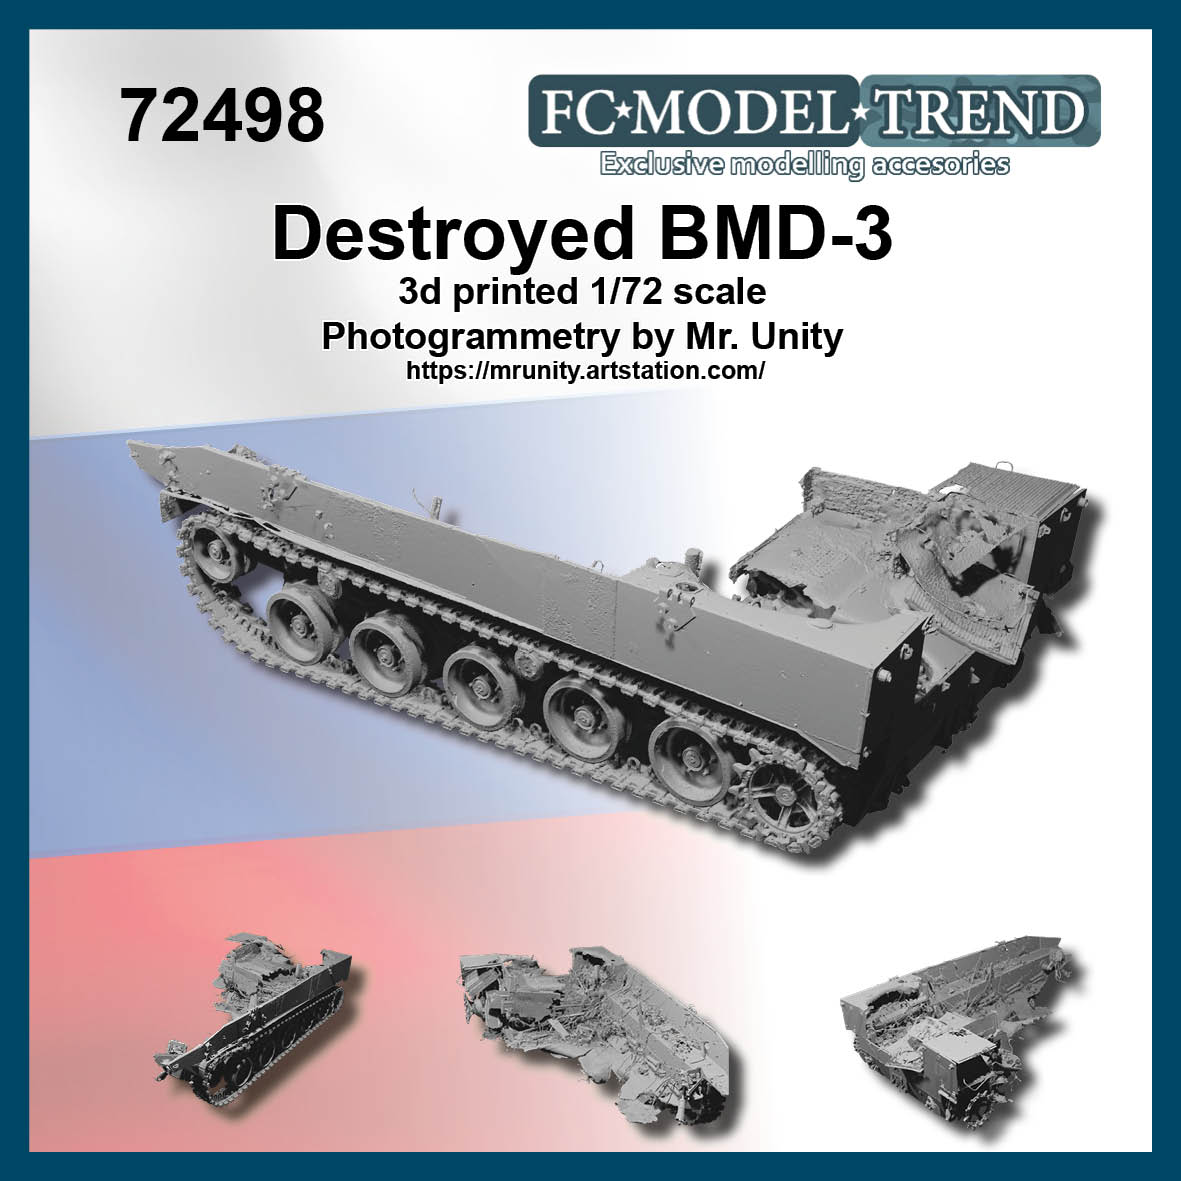 BMD-3 destroyed